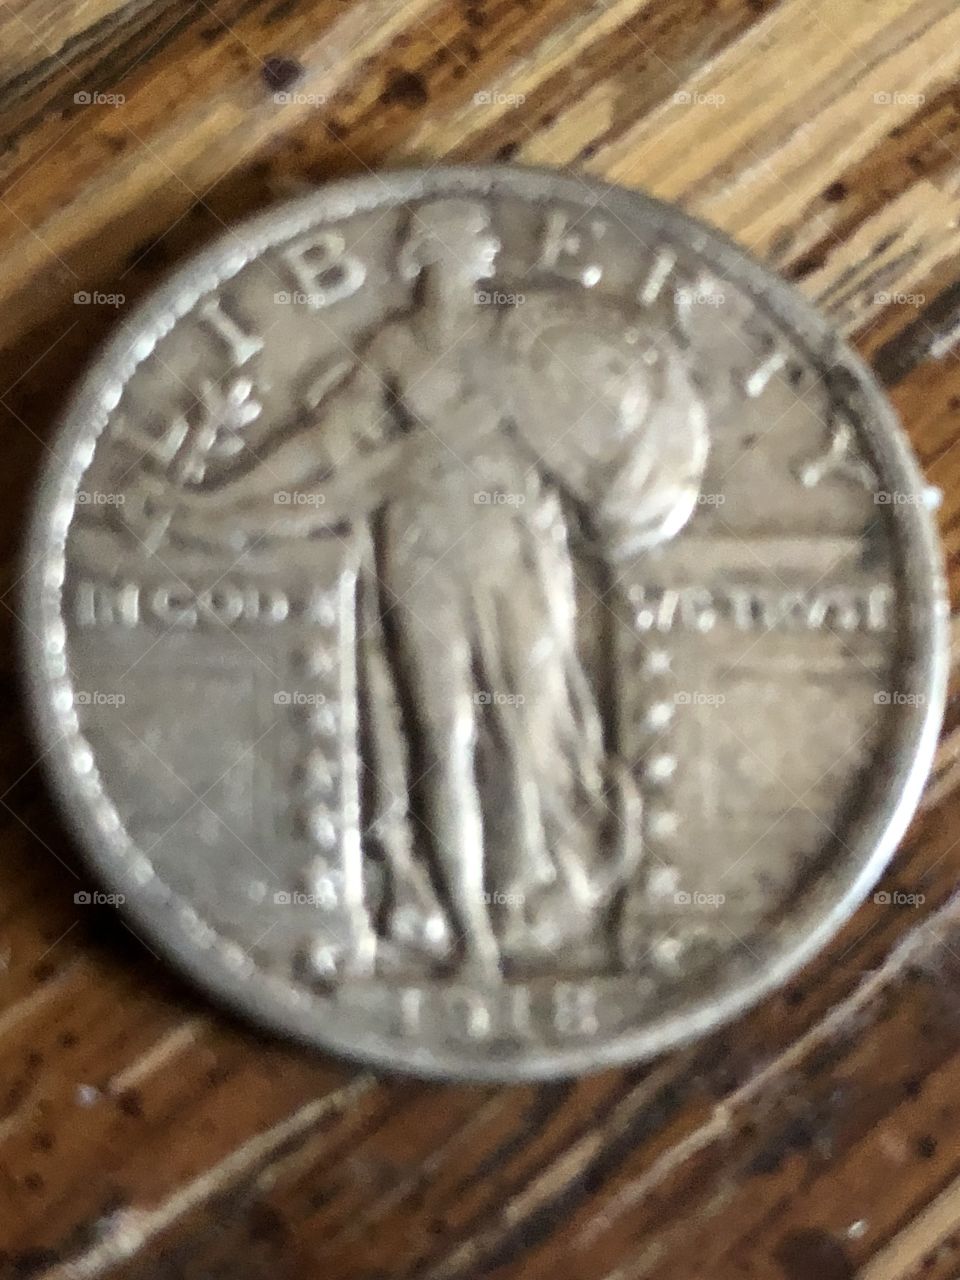 1918 standing liberty quarter